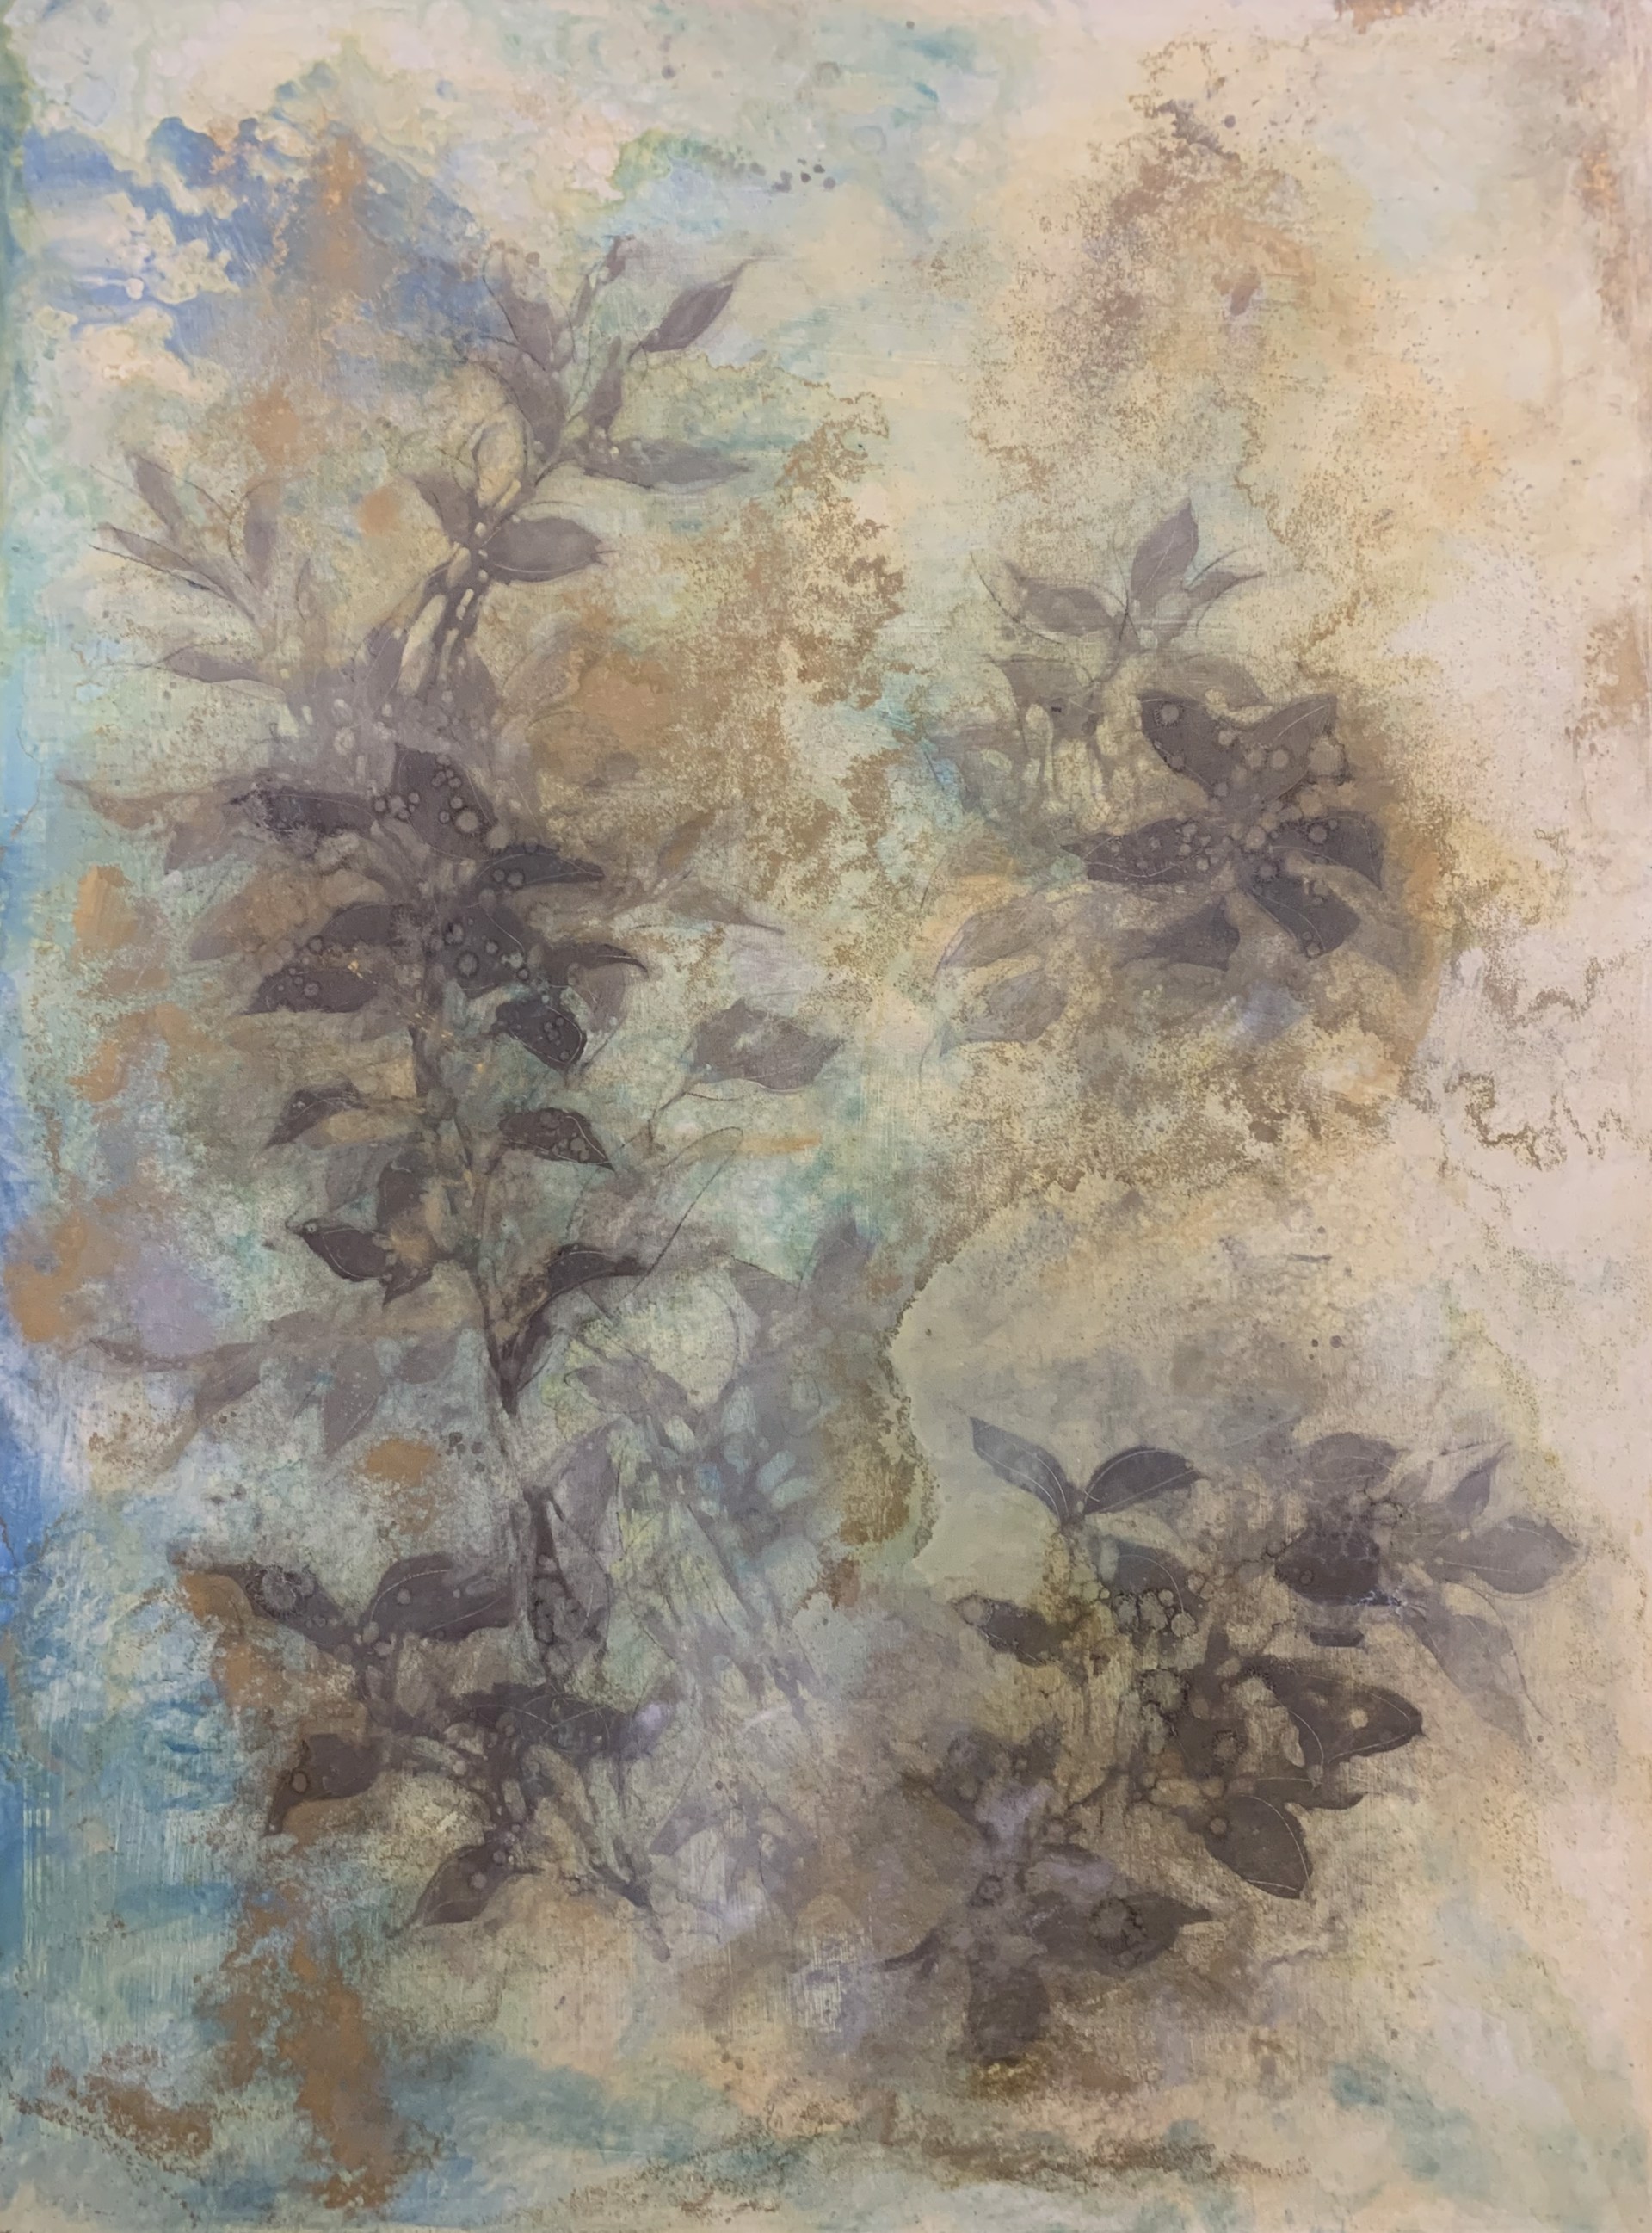 Lilacs in Movement III by Michelle Gagliano